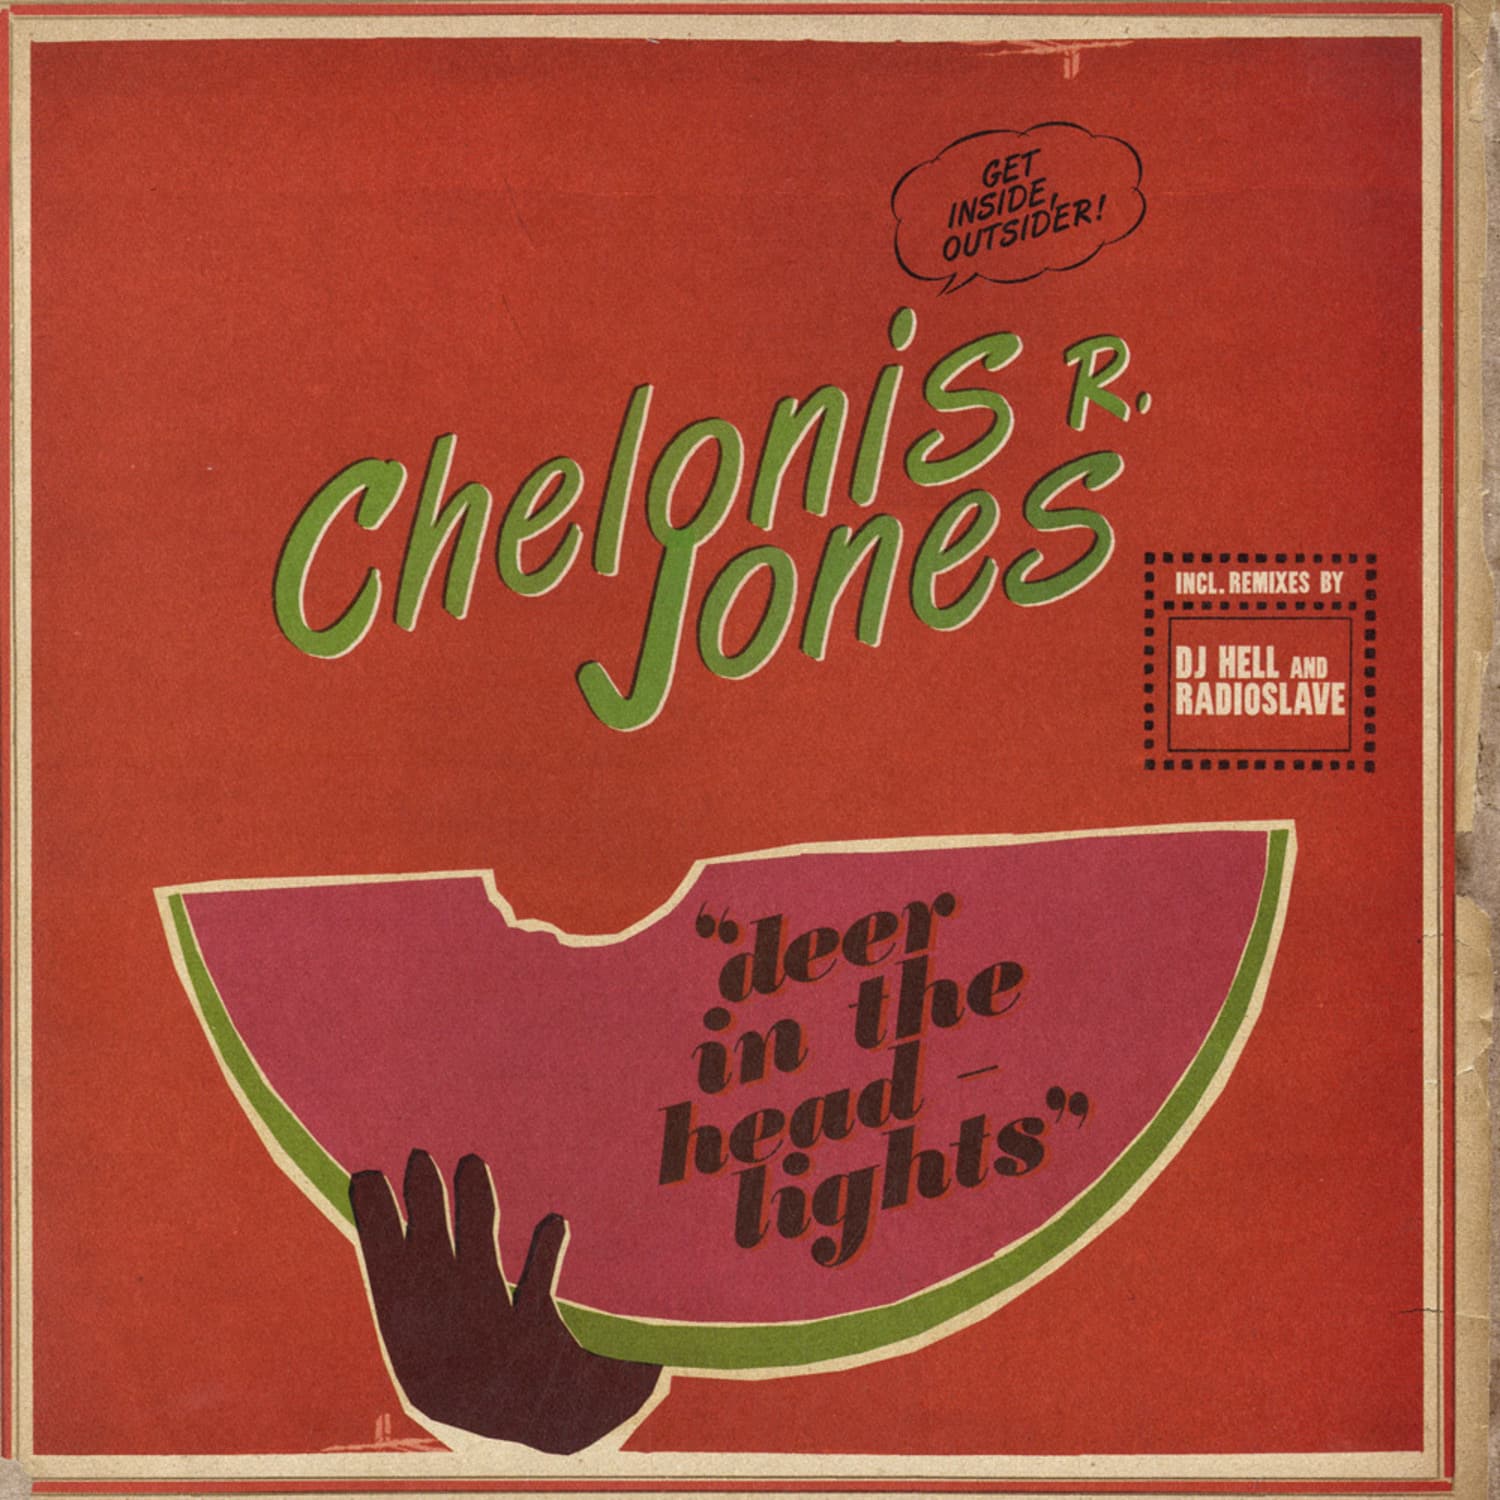 Chelonis R.Jones - DEAR IN THE HEADLIGHTS